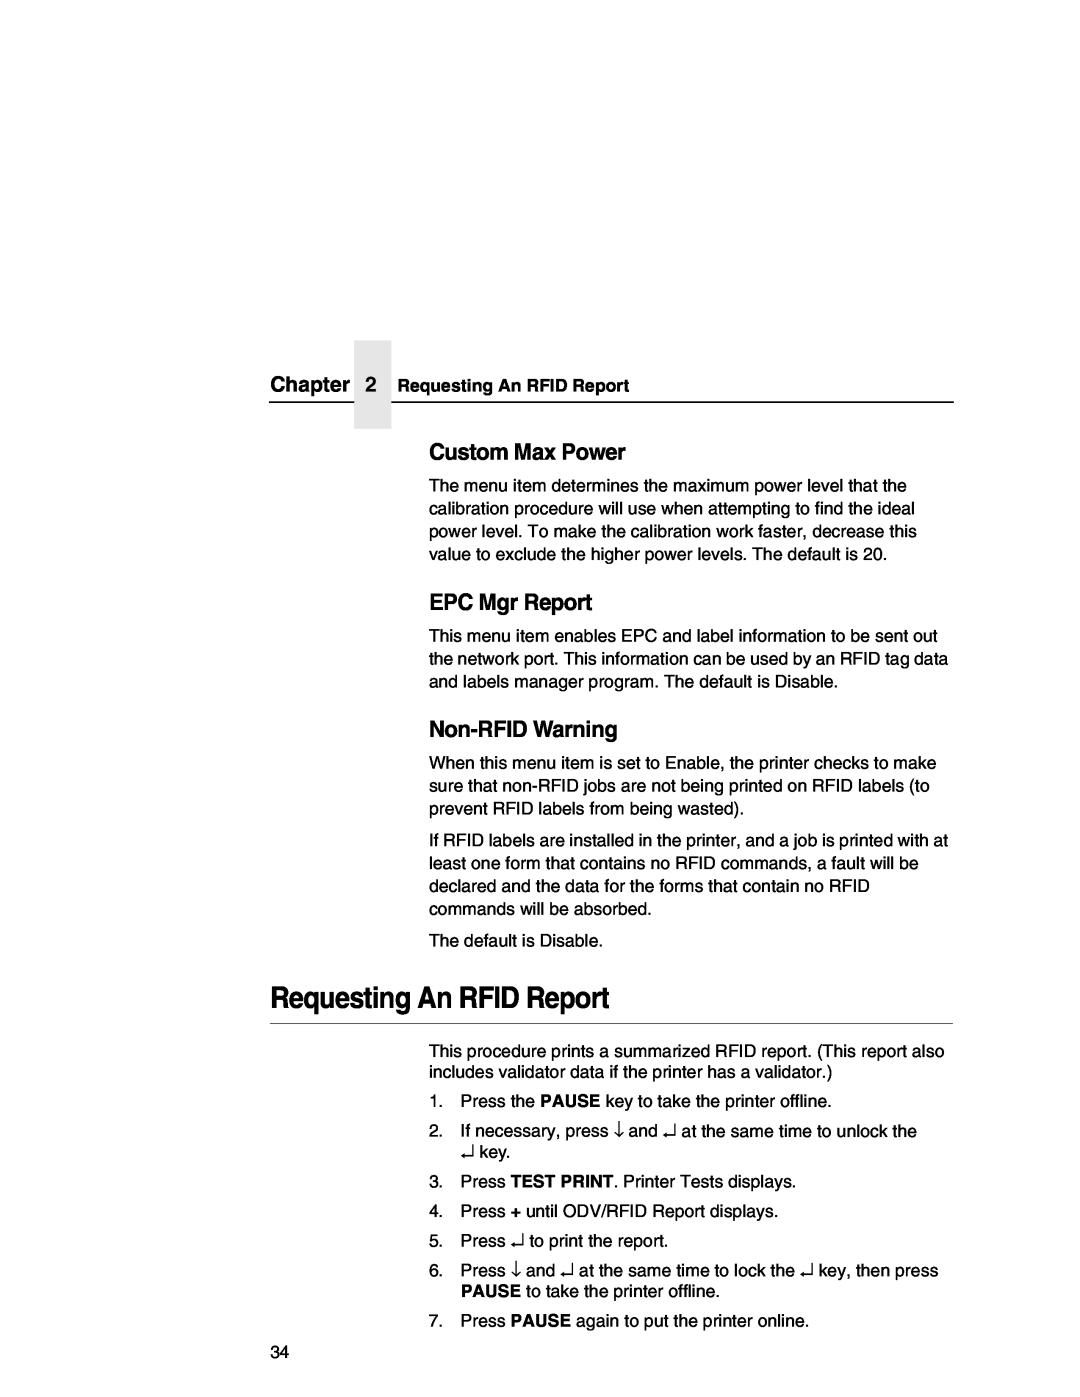 Printronix SL5000r MP manual Requesting An RFID Report, Custom Max Power, EPC Mgr Report, Non-RFID Warning 